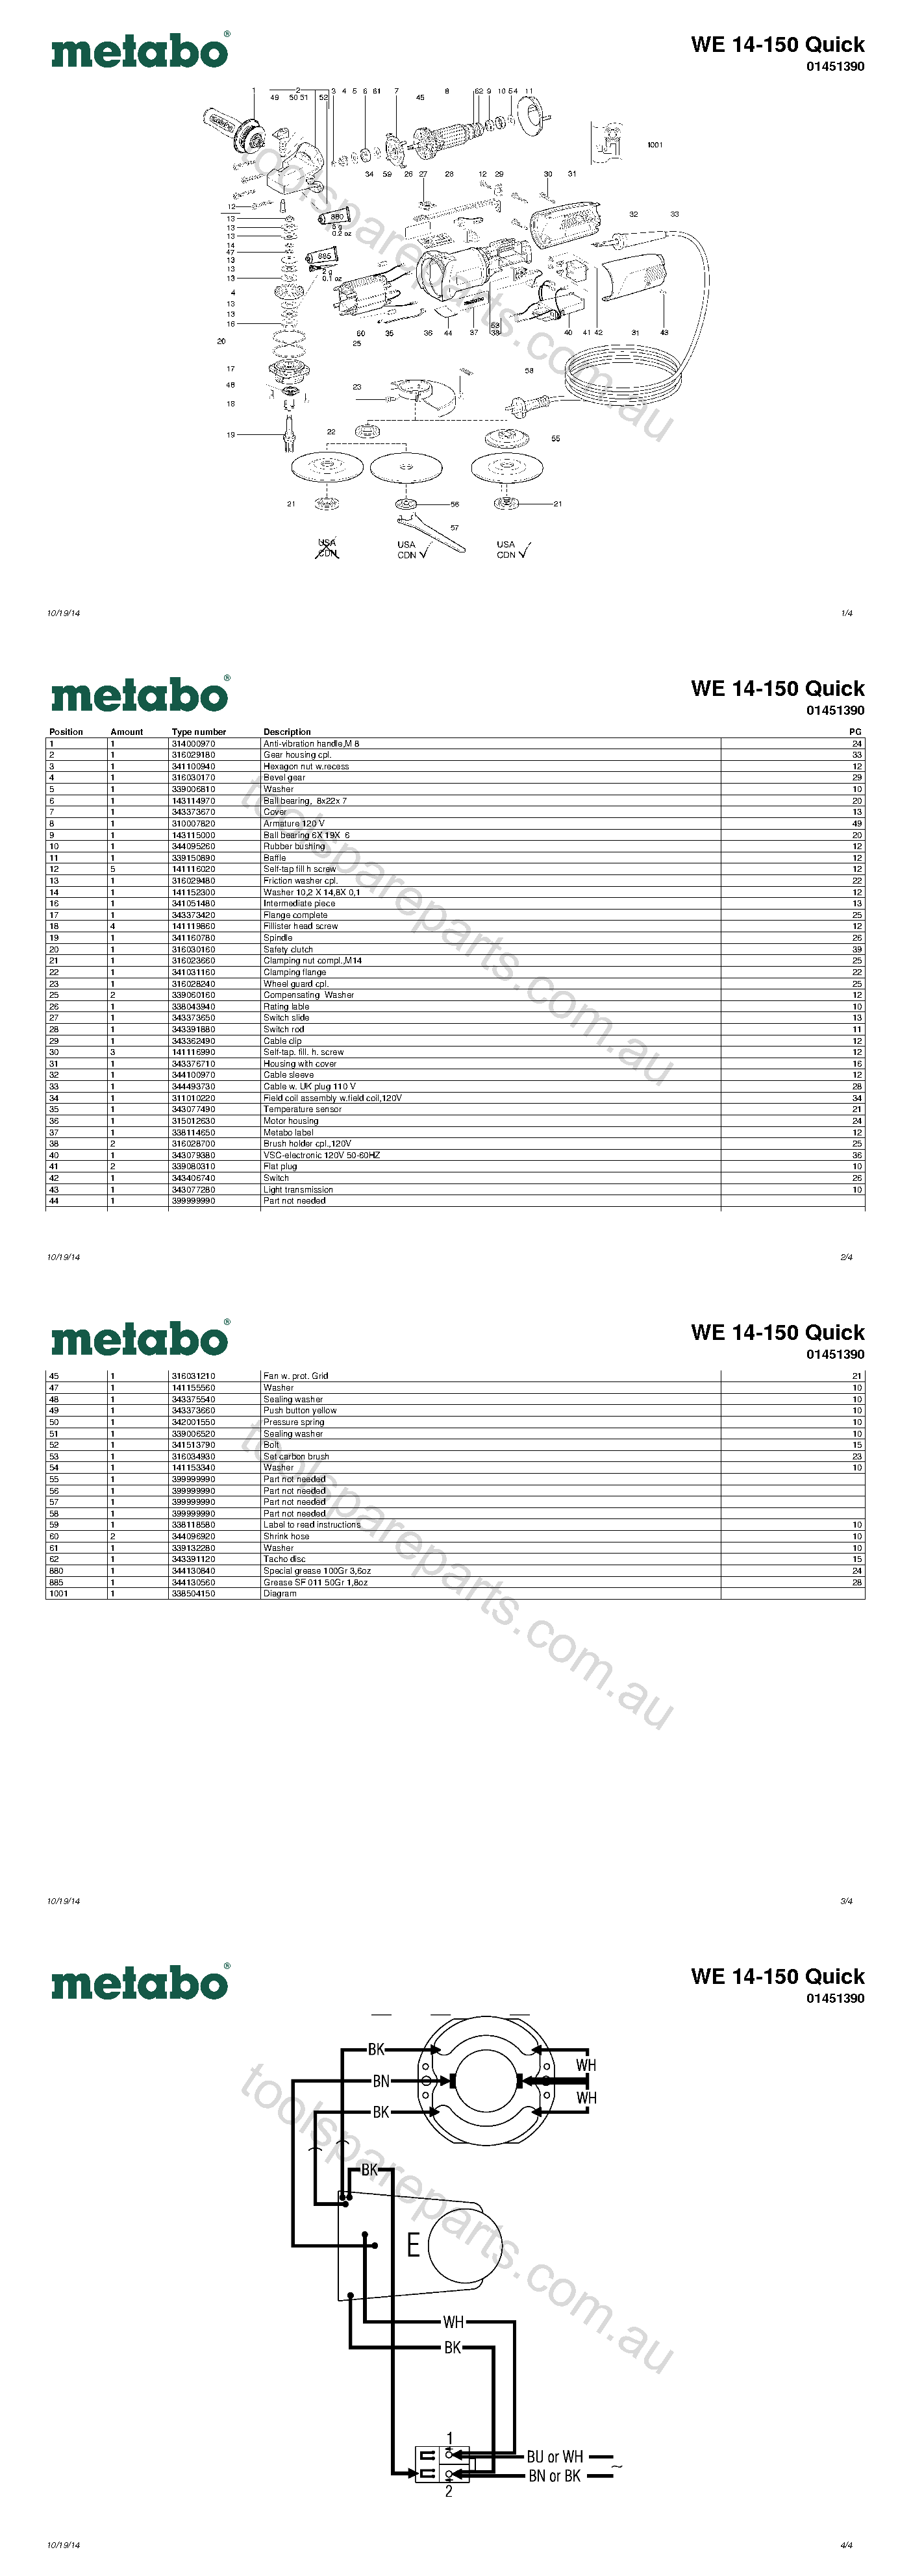 Metabo WE 14-150 Quick 01451390  Diagram 1